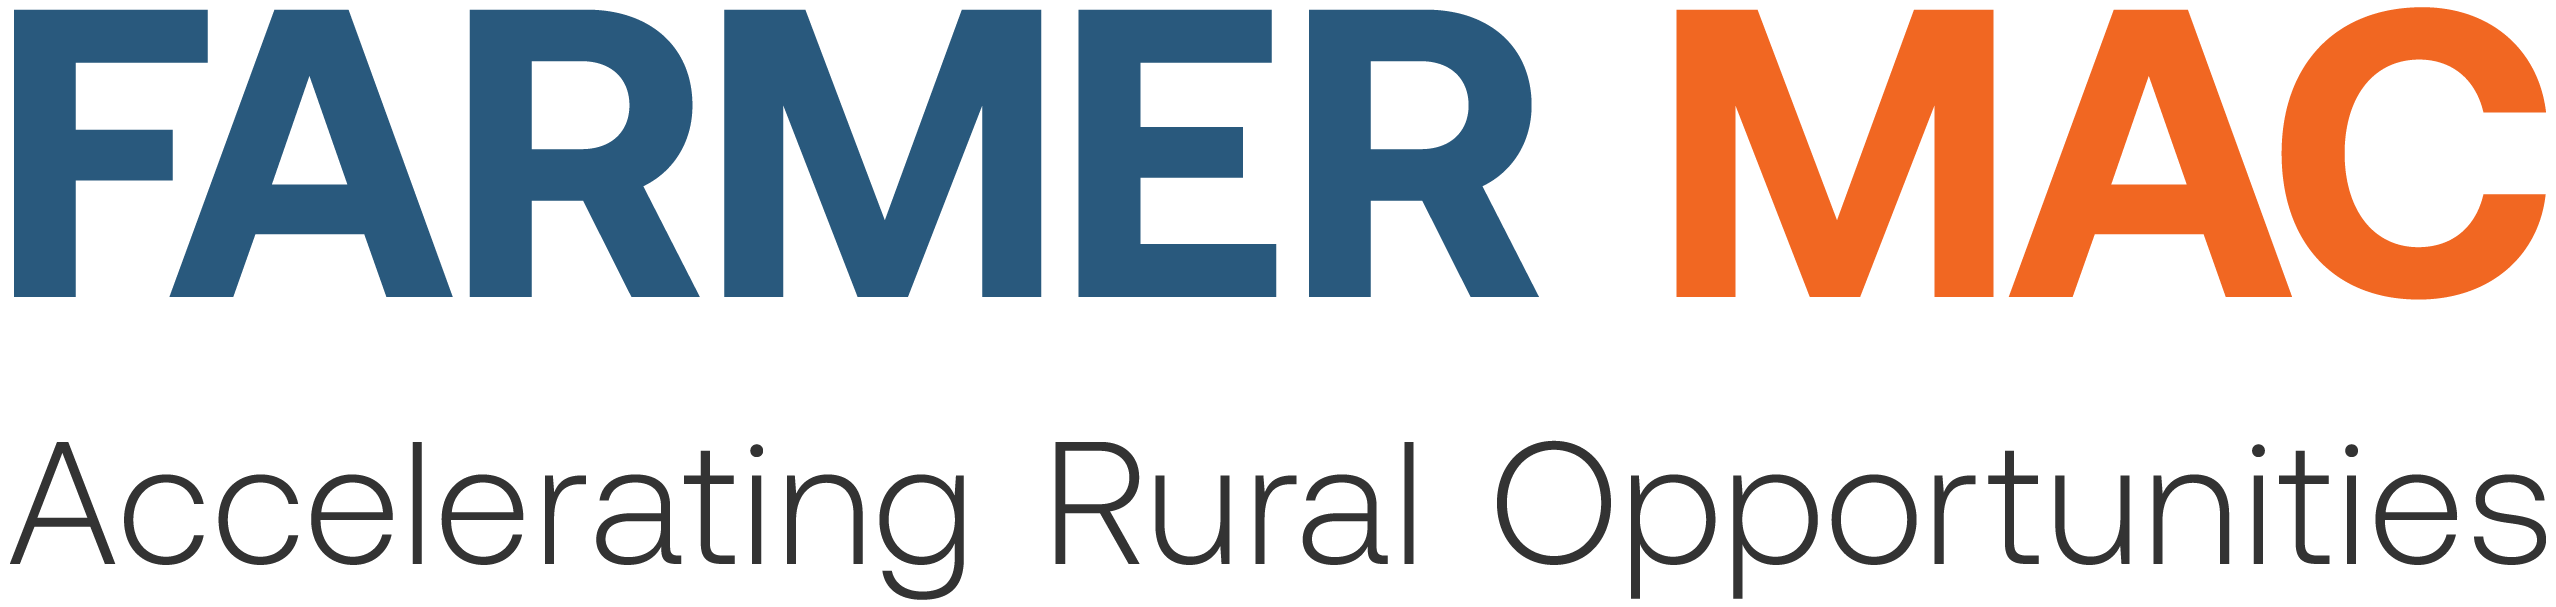 FarmerMac logo